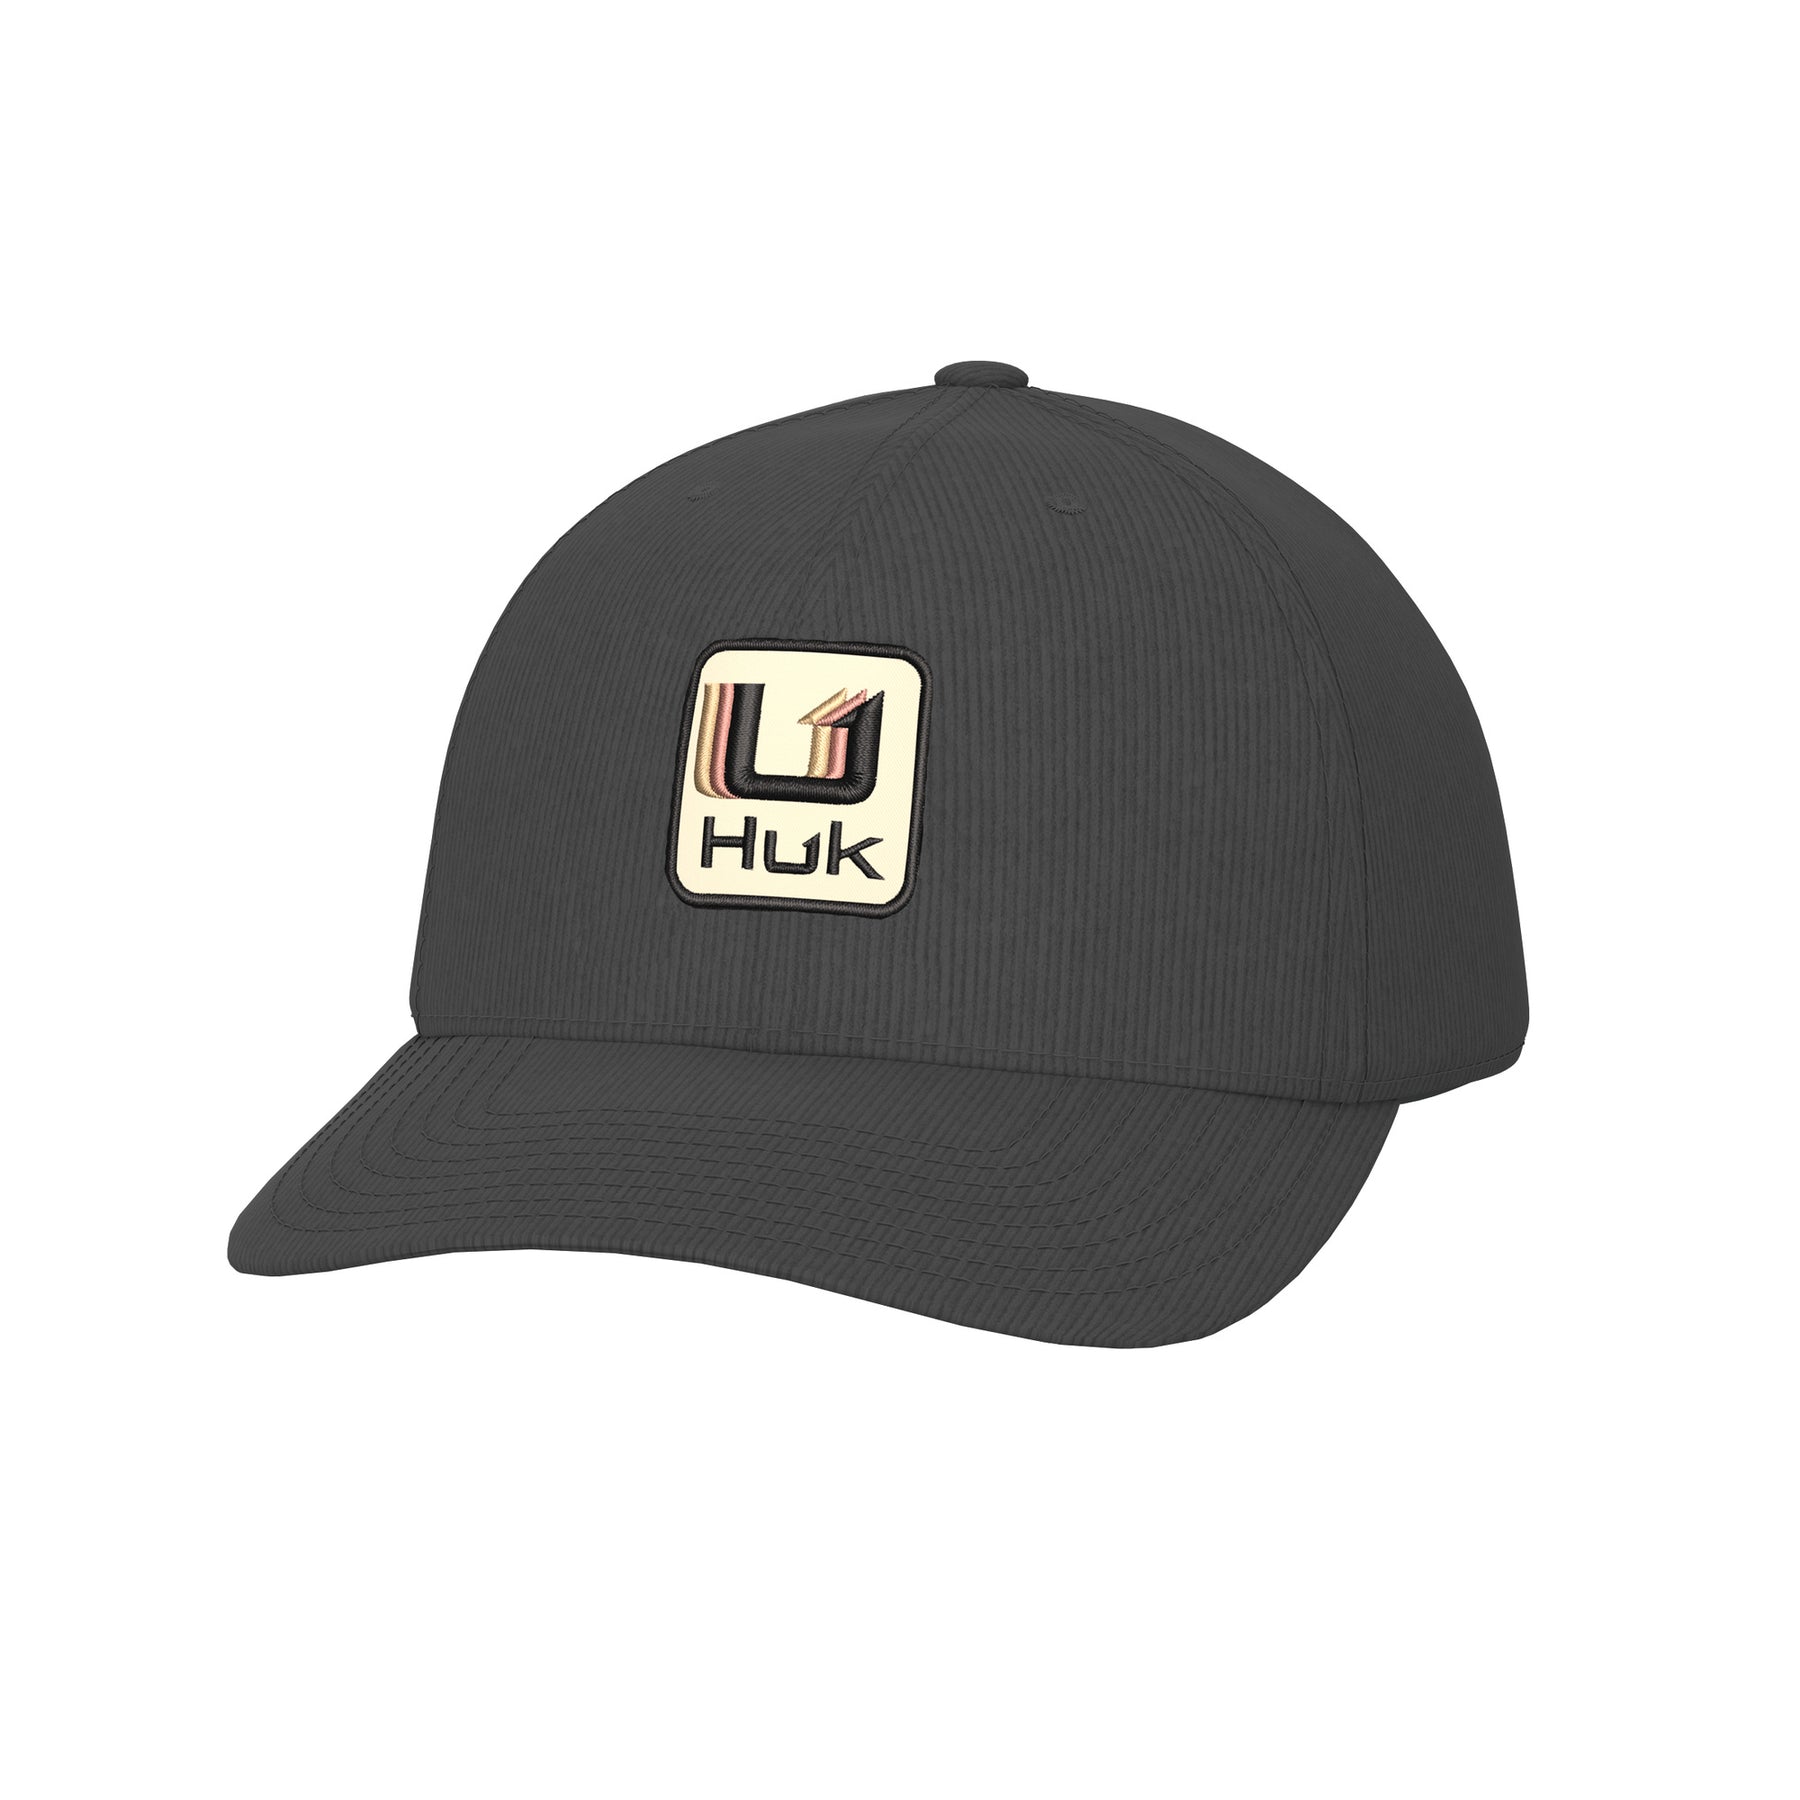 Huk Adjustable Size Baseball Cap Fishing Hats & Headwear for sale